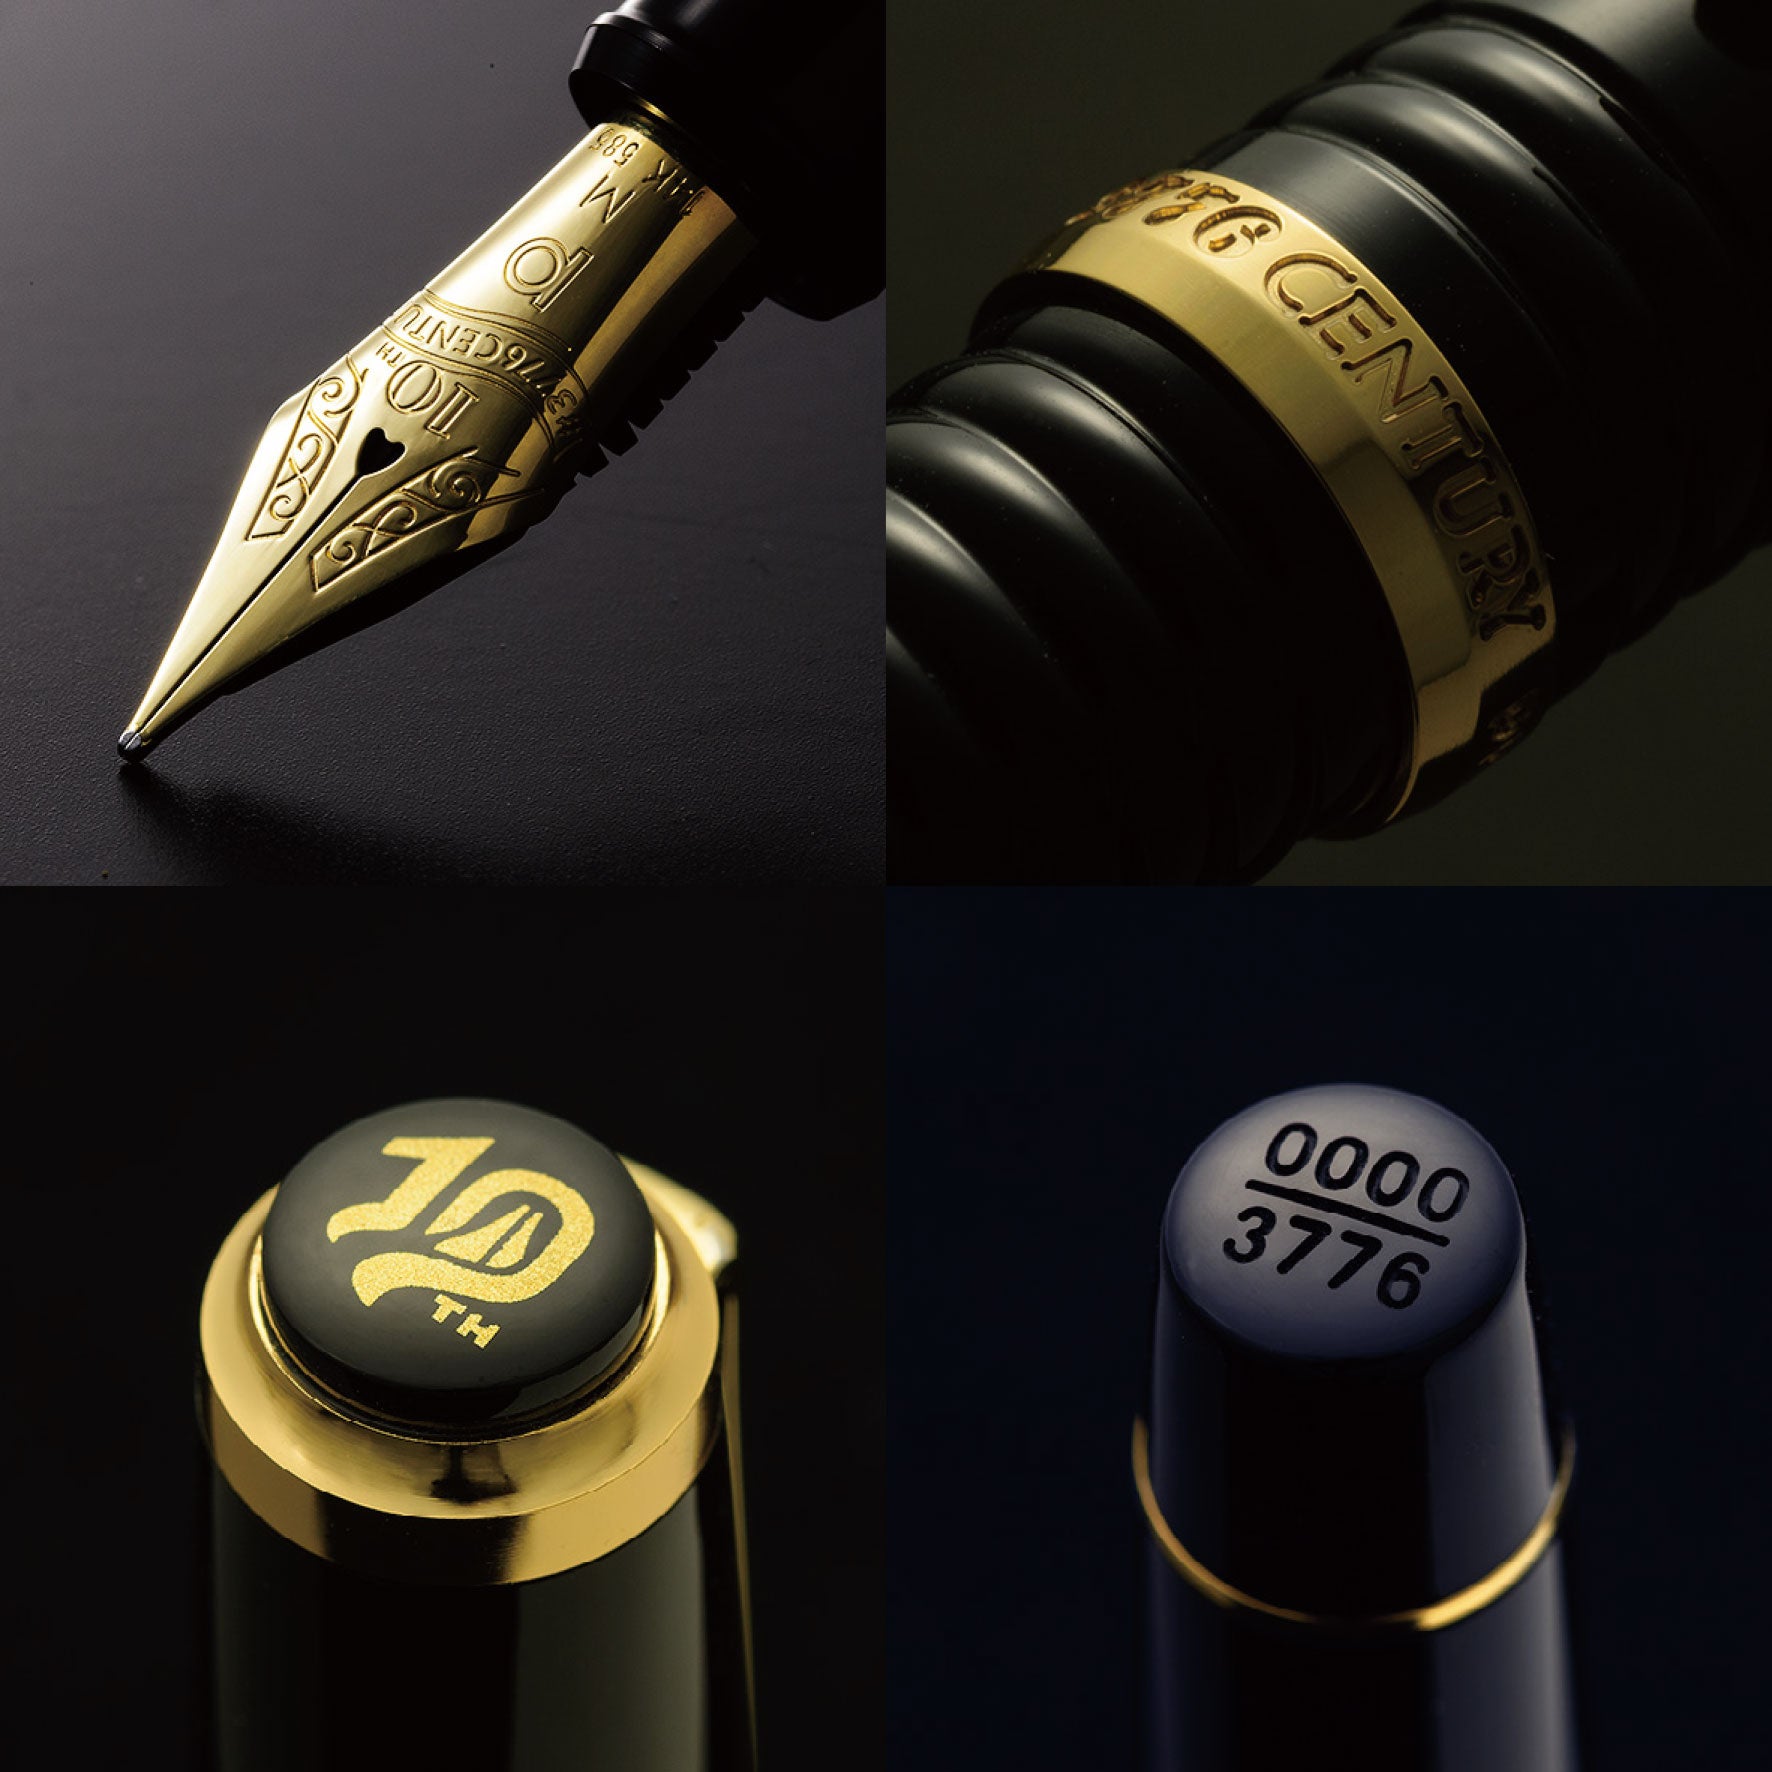 10th Anniversary fountain pen details